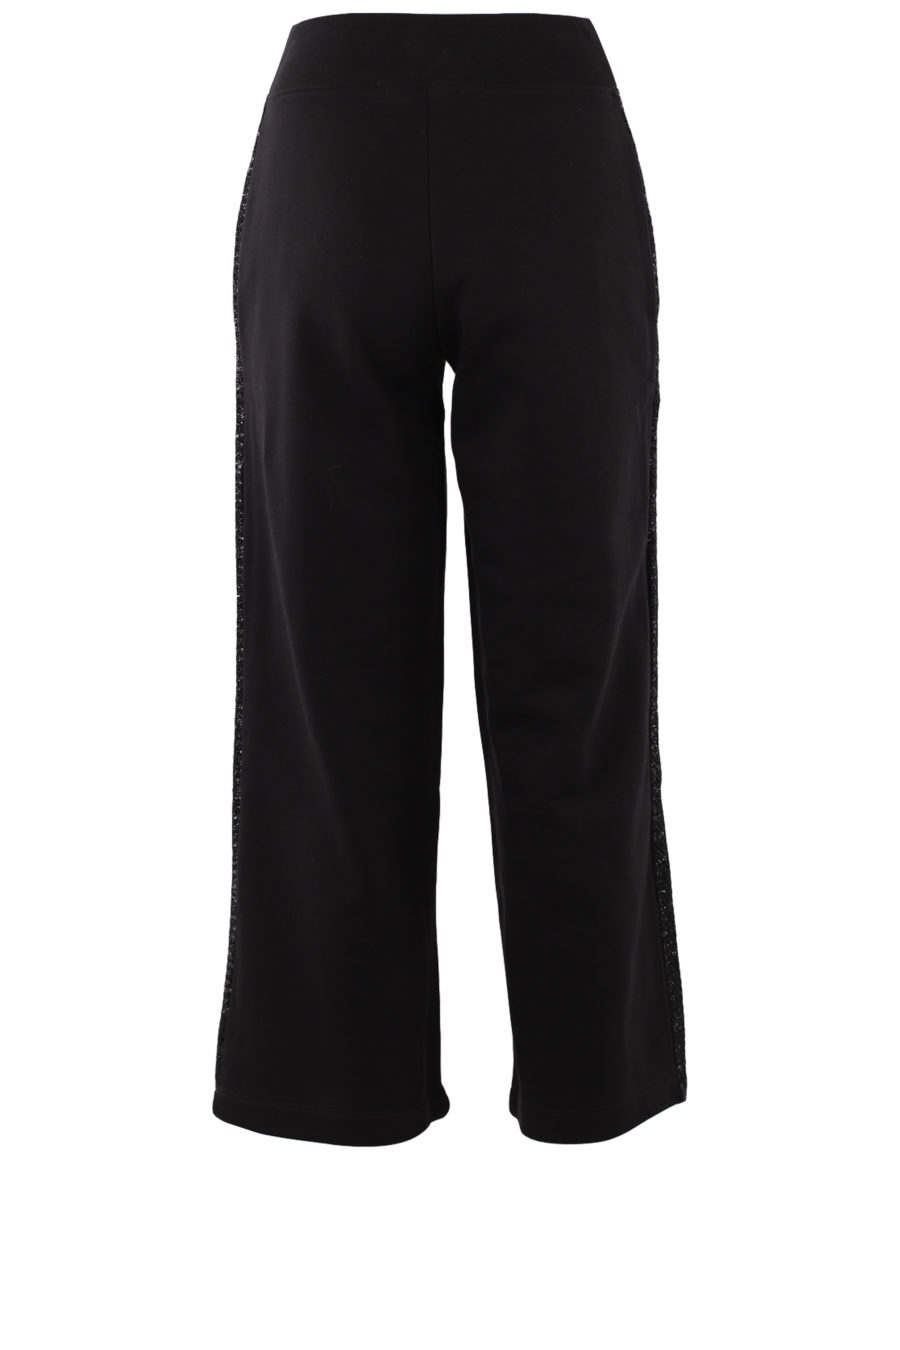 Pantalon noir avec ruban bouclé - IMG 0375